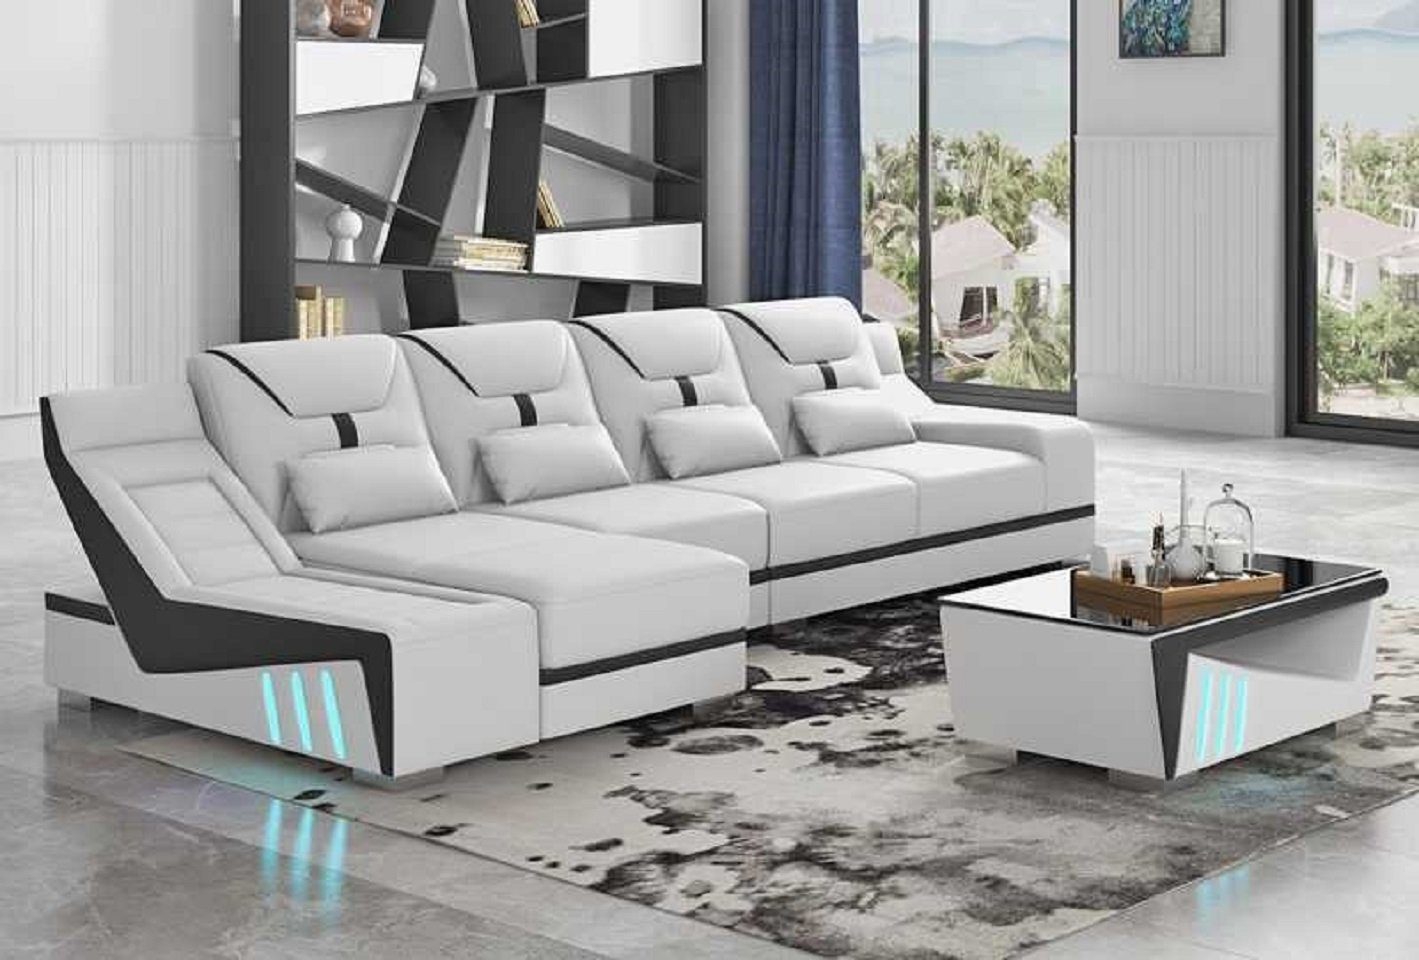 JVmoebel Ecksofa Modern Ecksofa Designersofa Sofa L Form Couch Sofas Eck Möbel, 3 Teile, Made in Europe Weiß